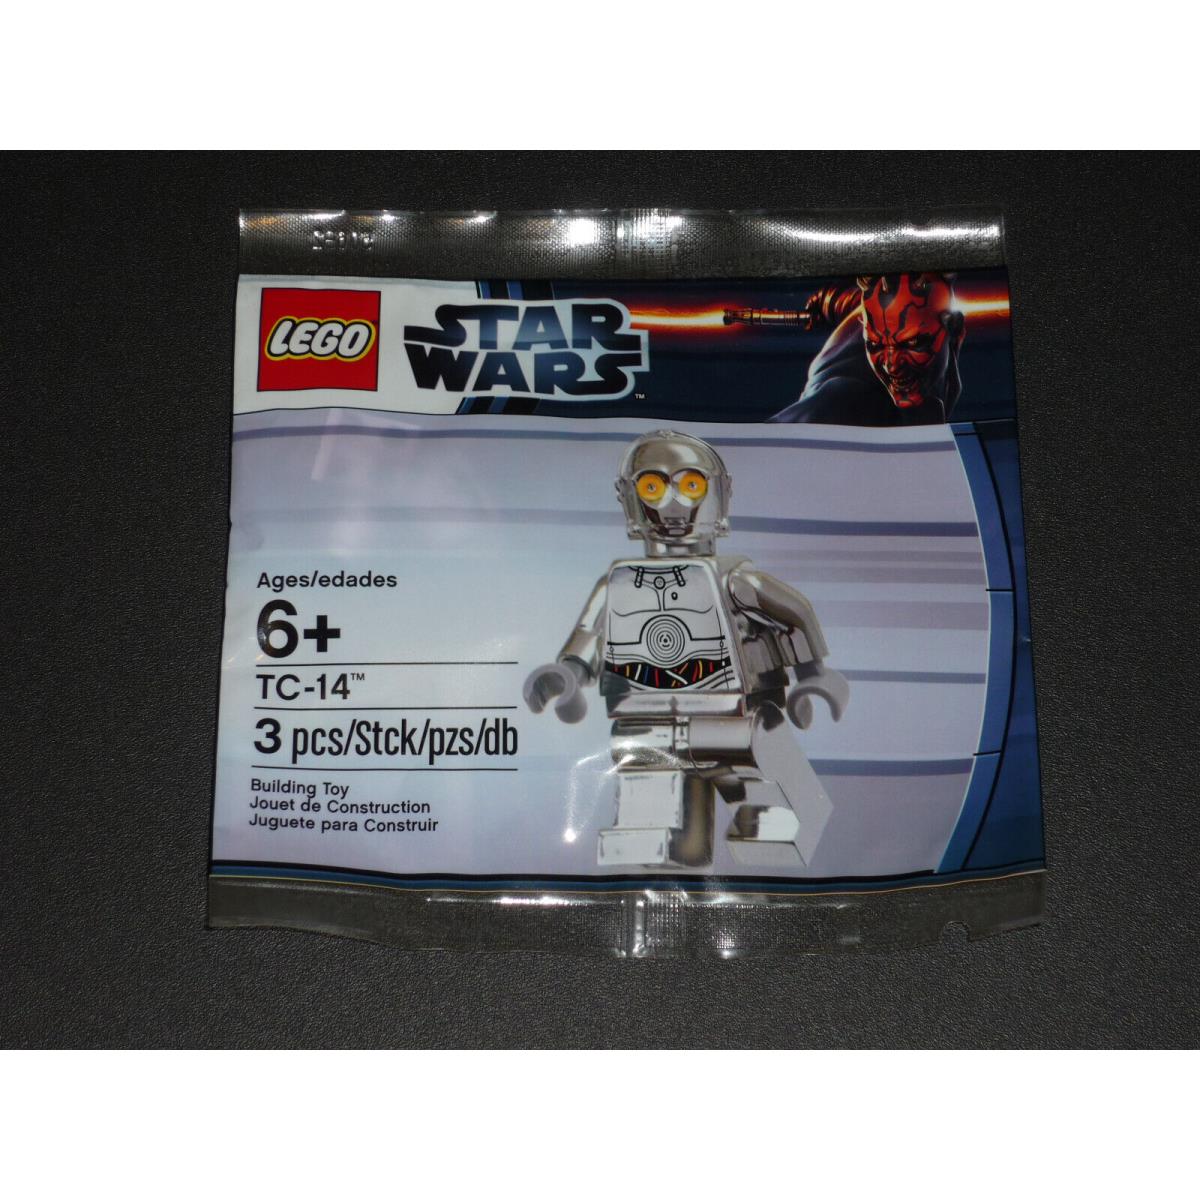 Lego 5000063 Star Wars Chrome TC-14 Collectible Minifigure Polybag - 